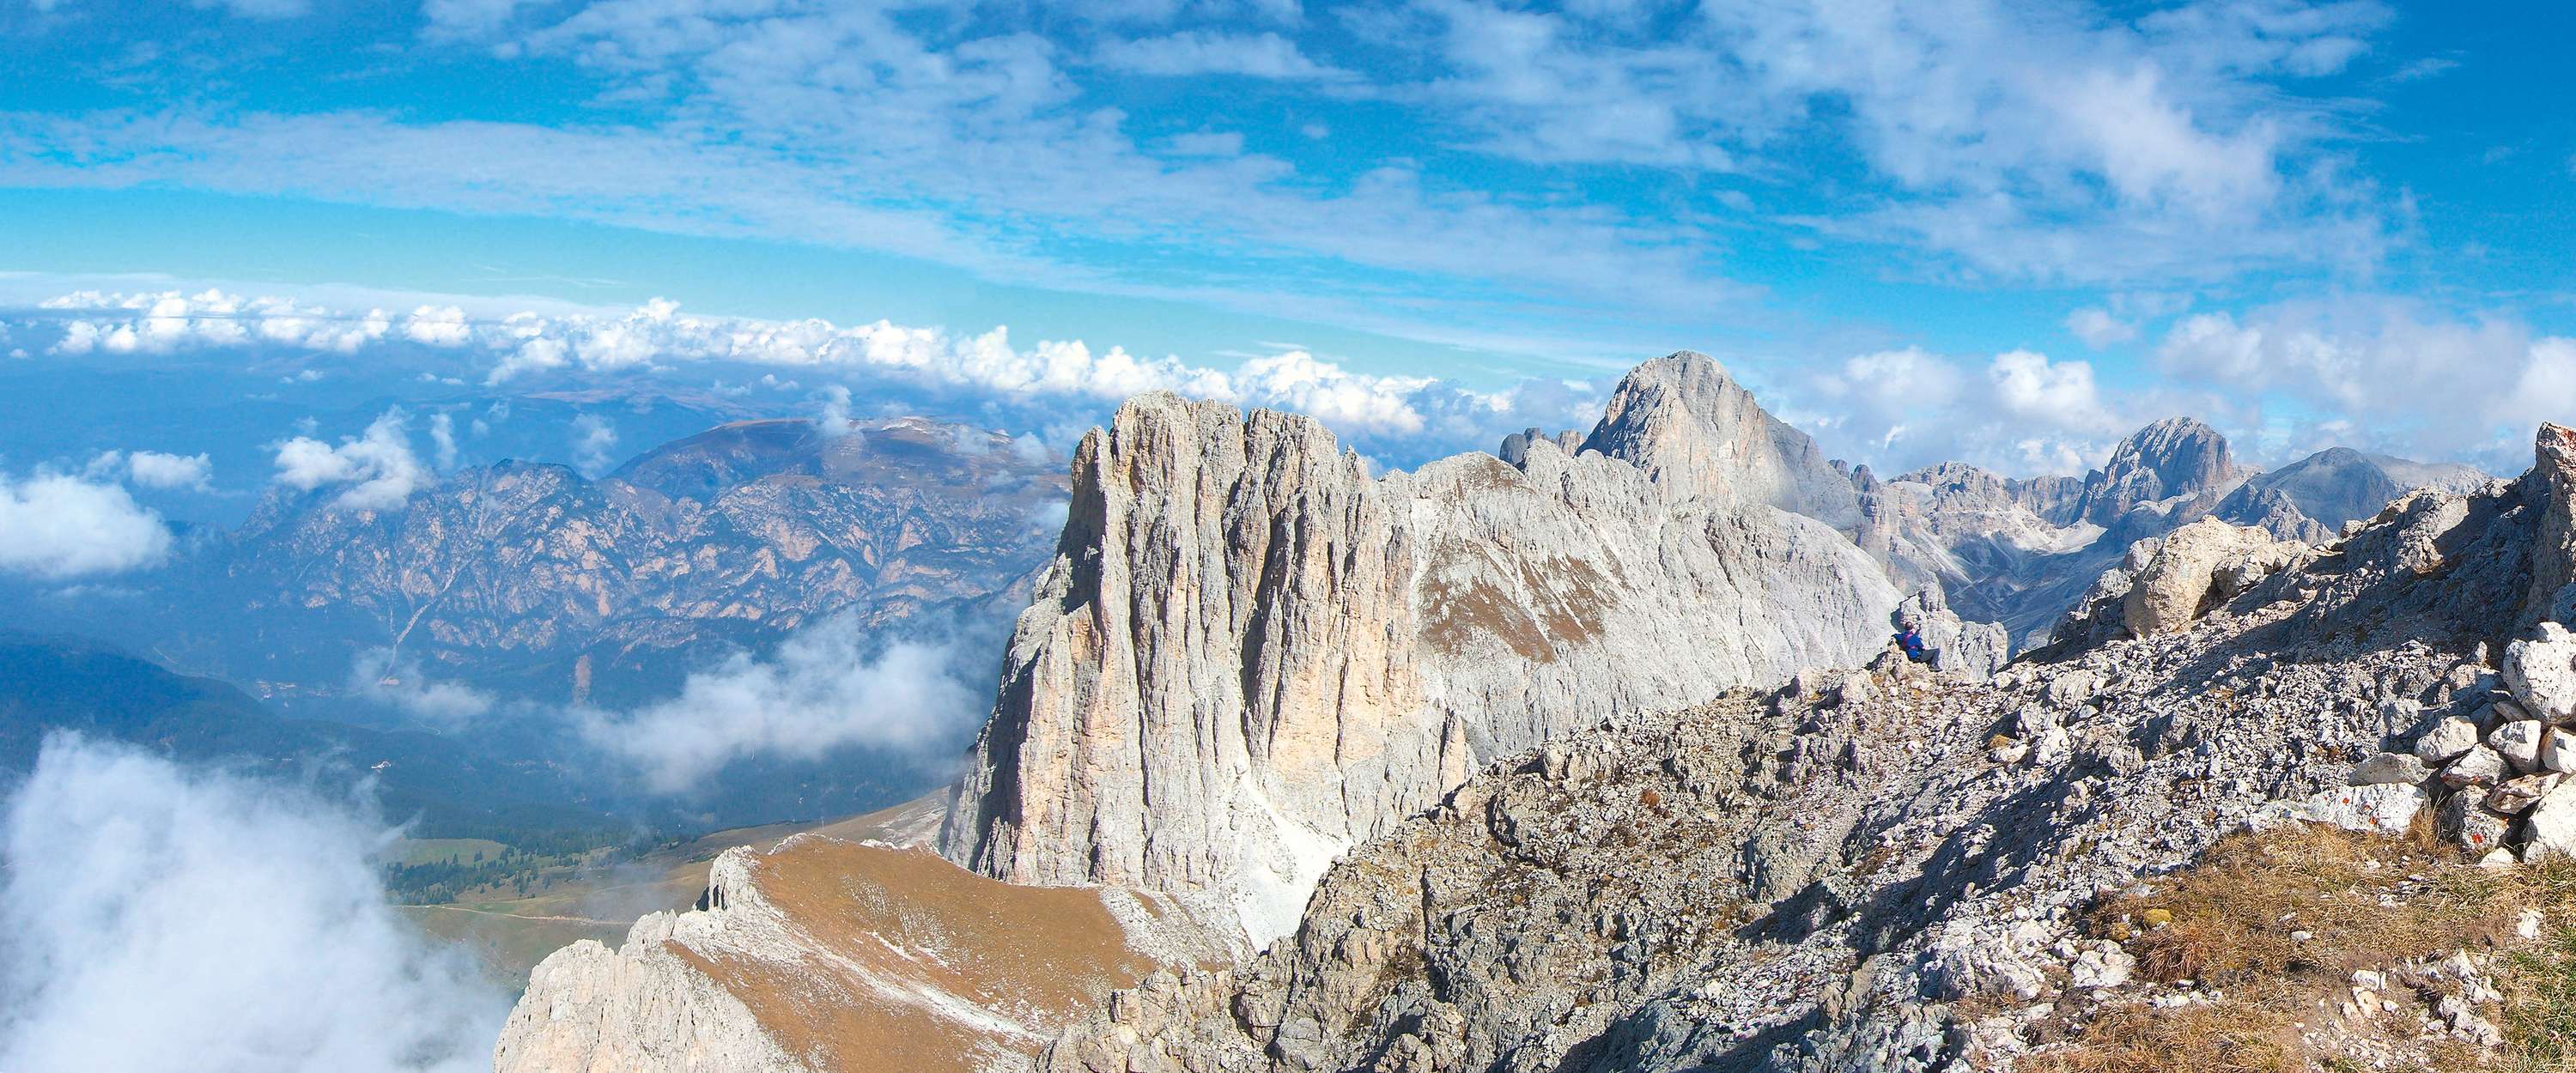             Bergtop - fotobehang met bergpanorama & wollen deken
        